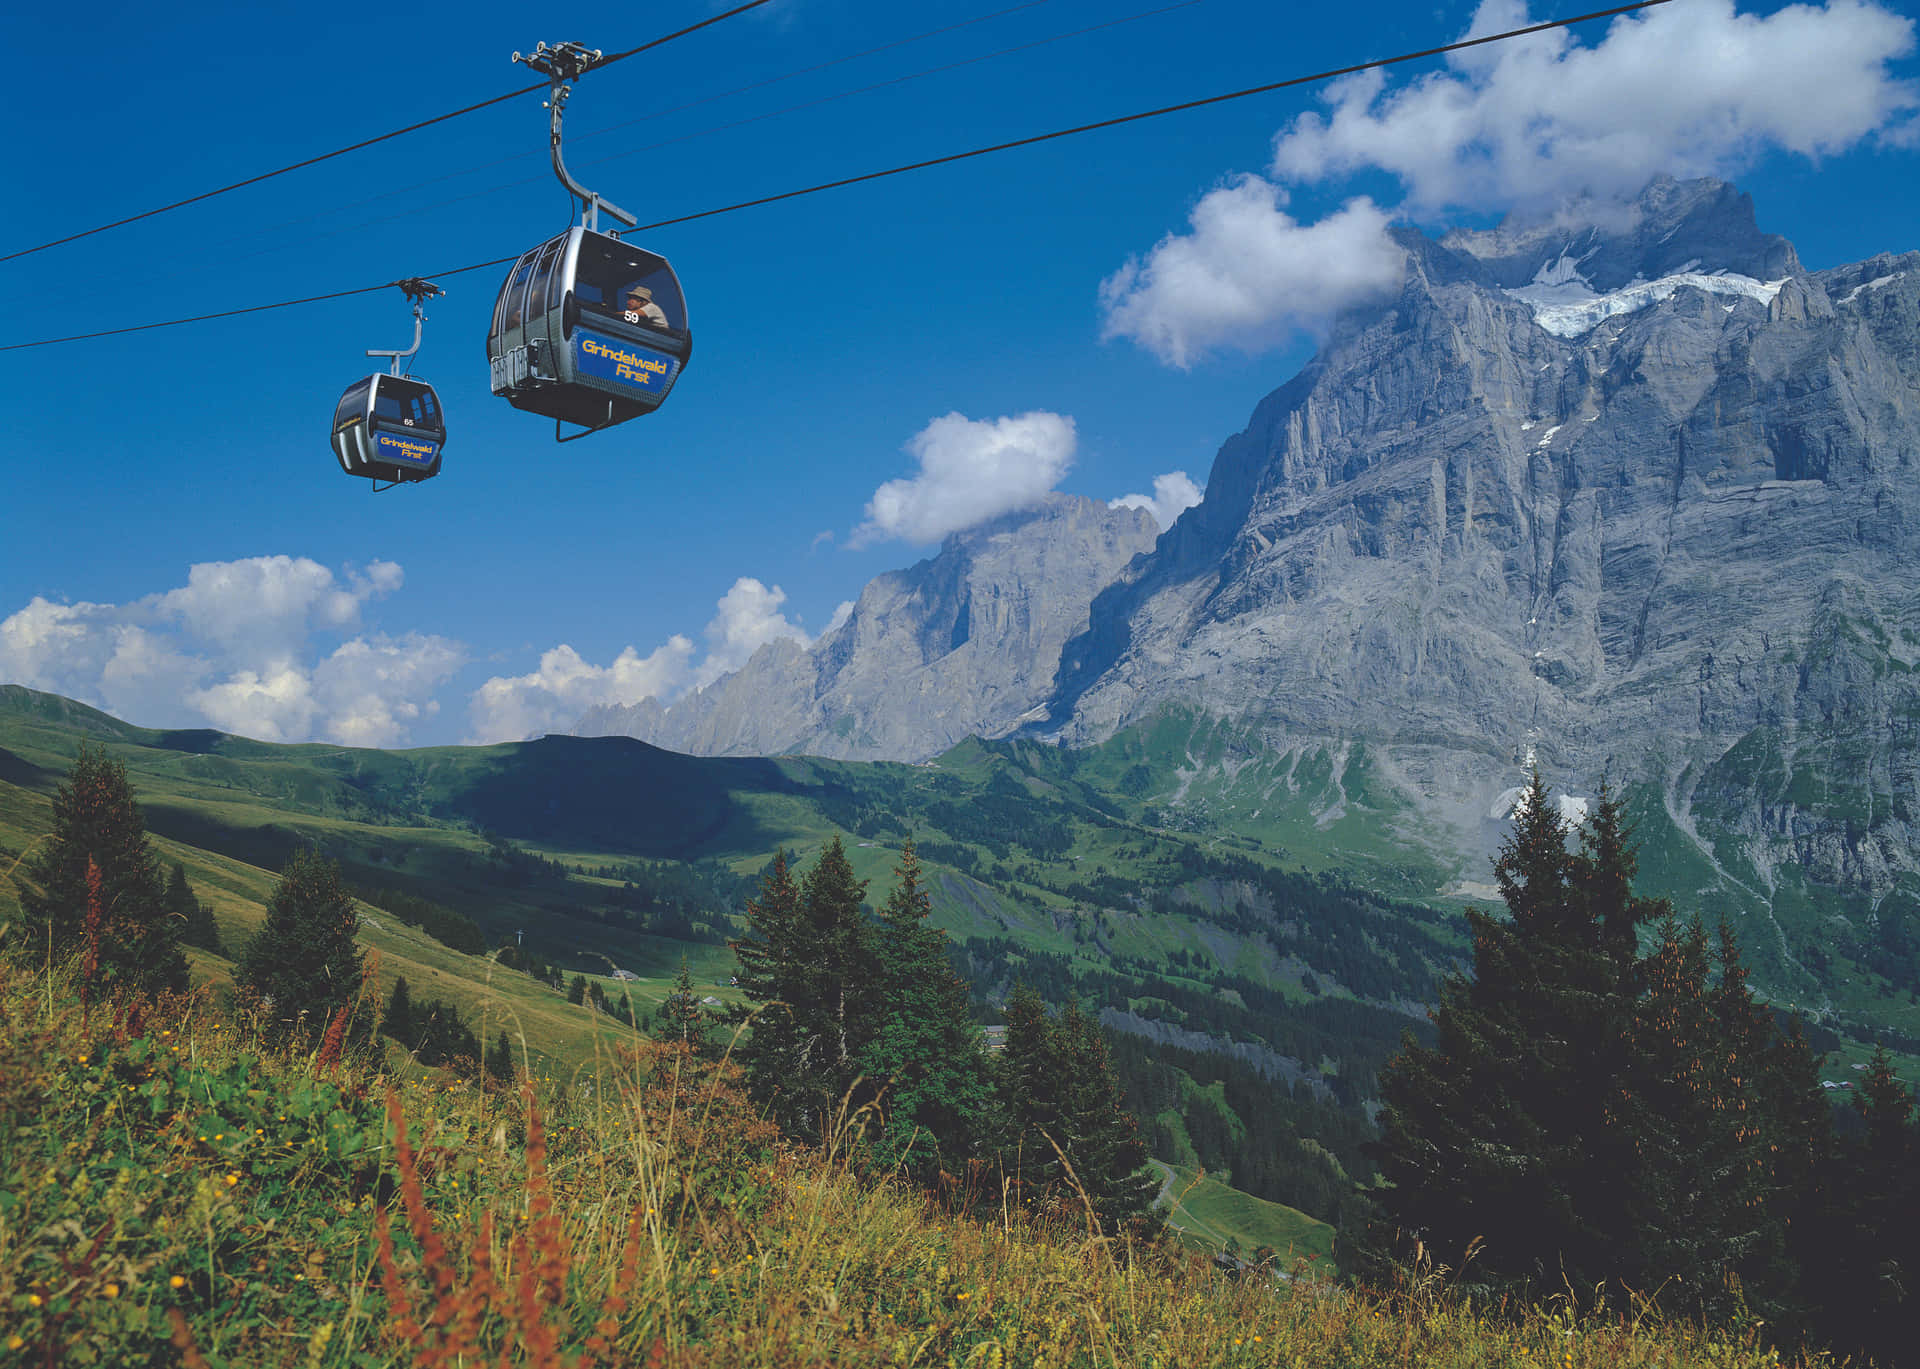 "Rugged Alpine Beauty of Switzerland"